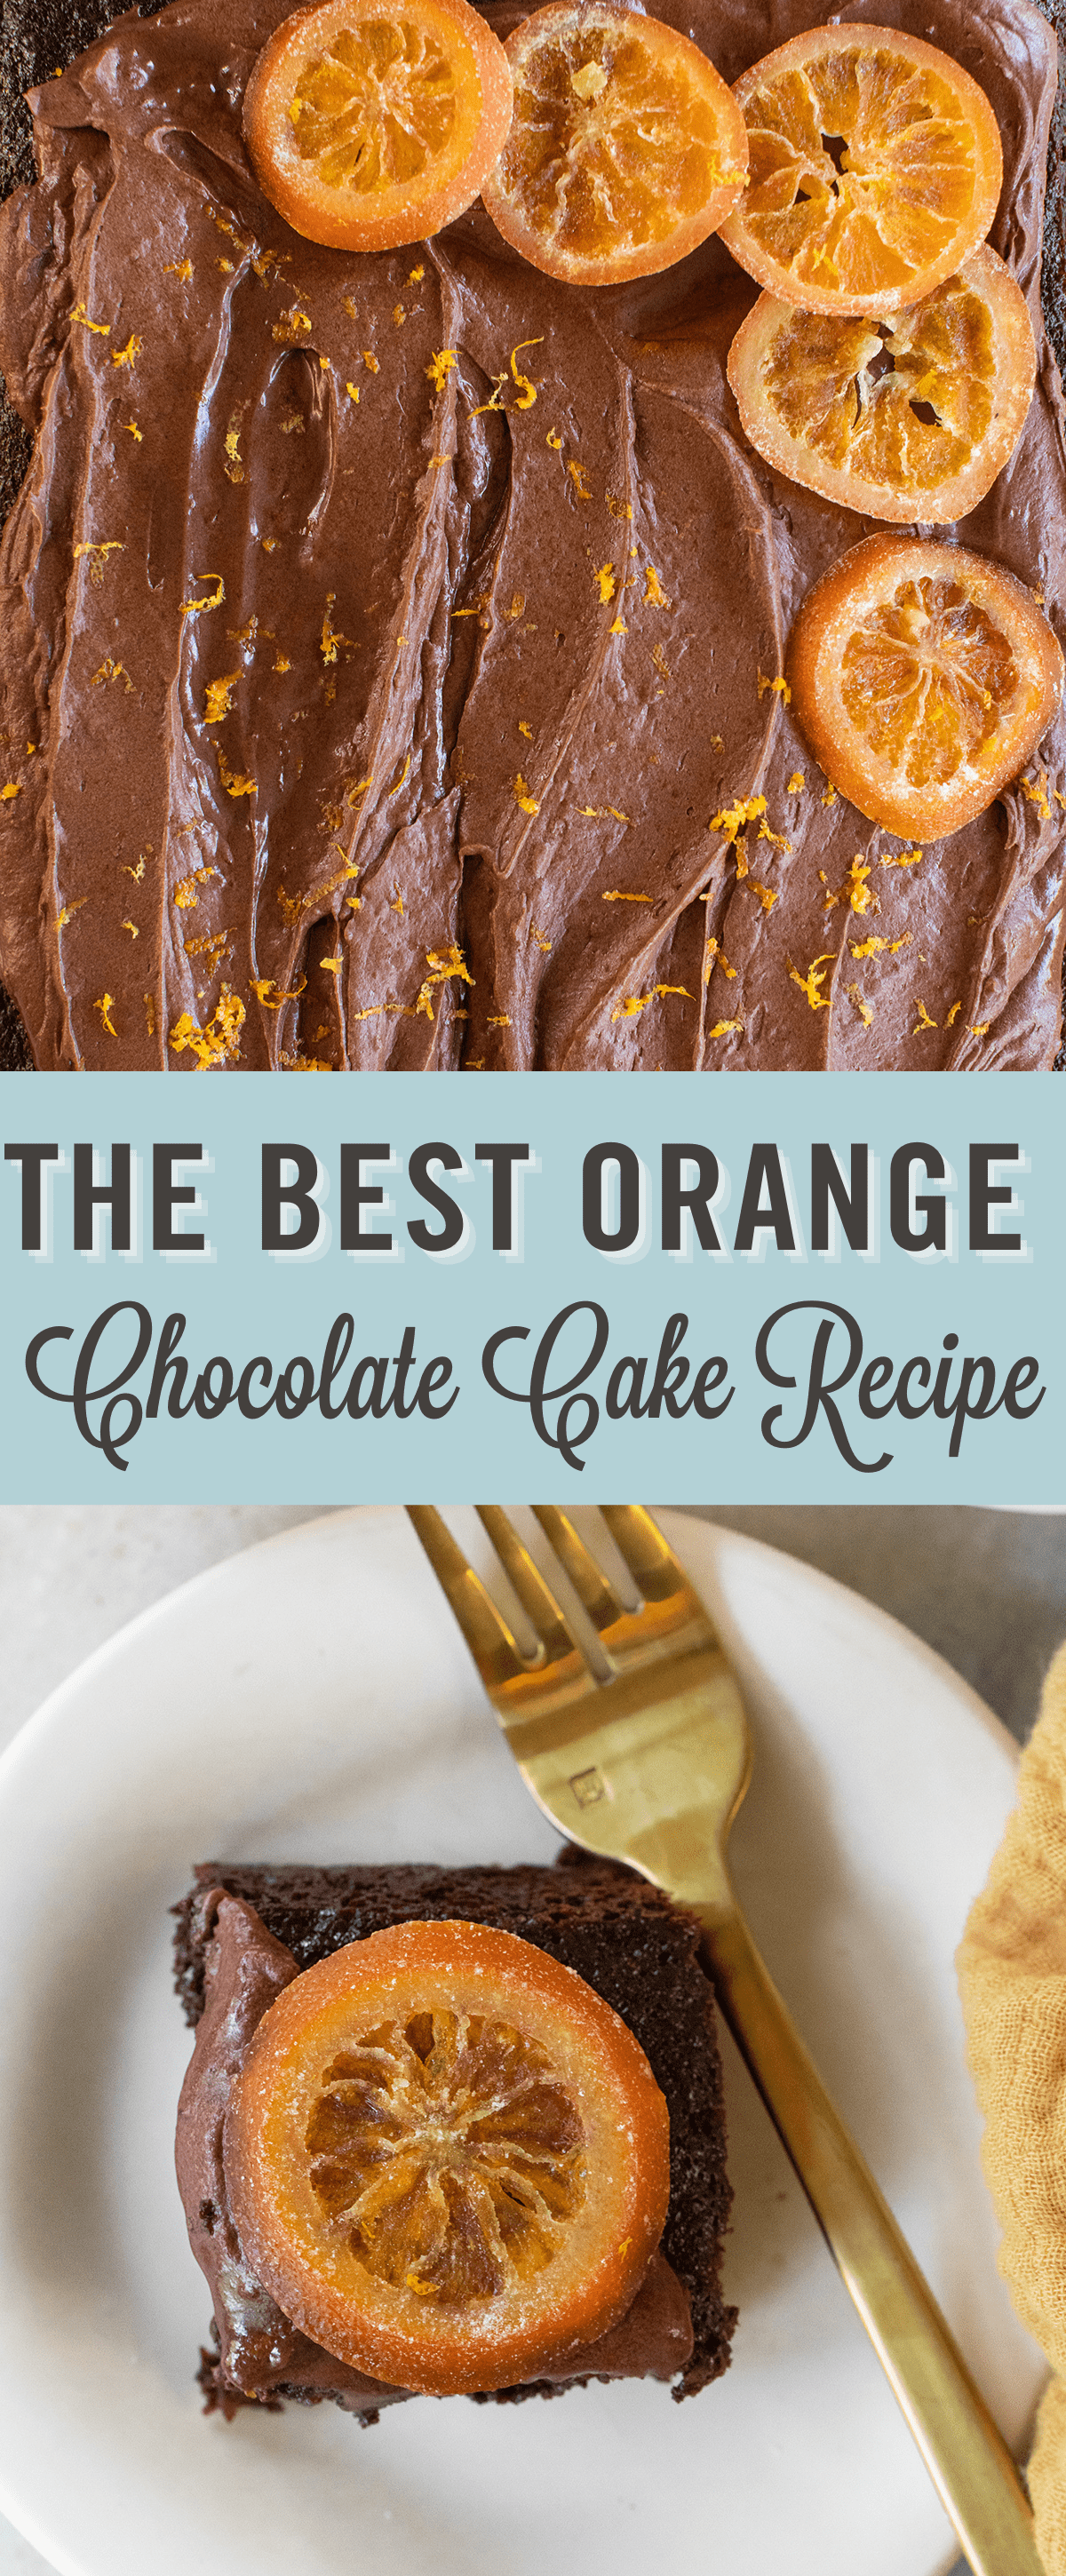 The best chocolate orange cake recipe with title.